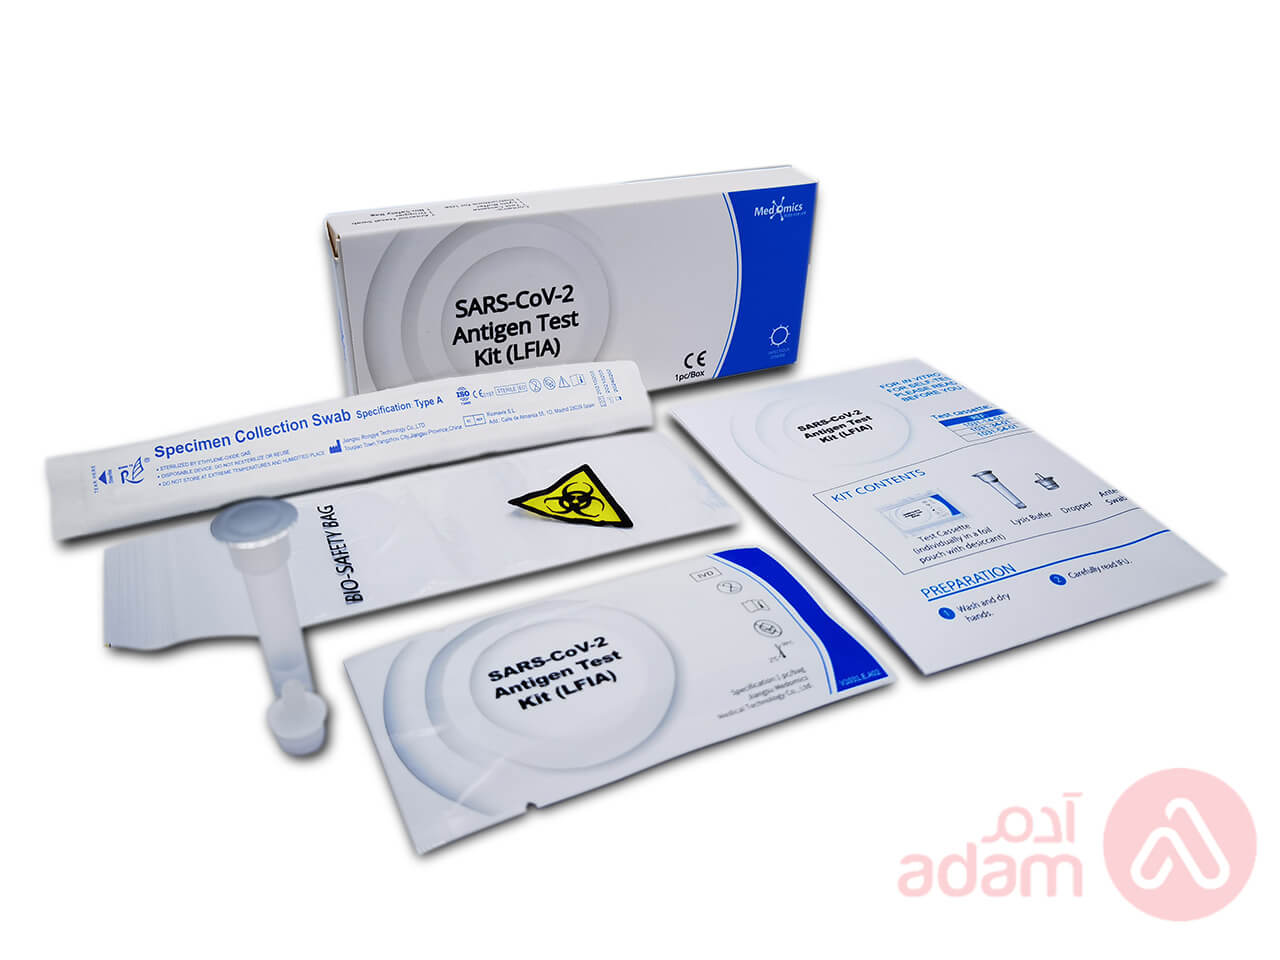 Medomics Sars-Co V2 Antigen Test (LFia)